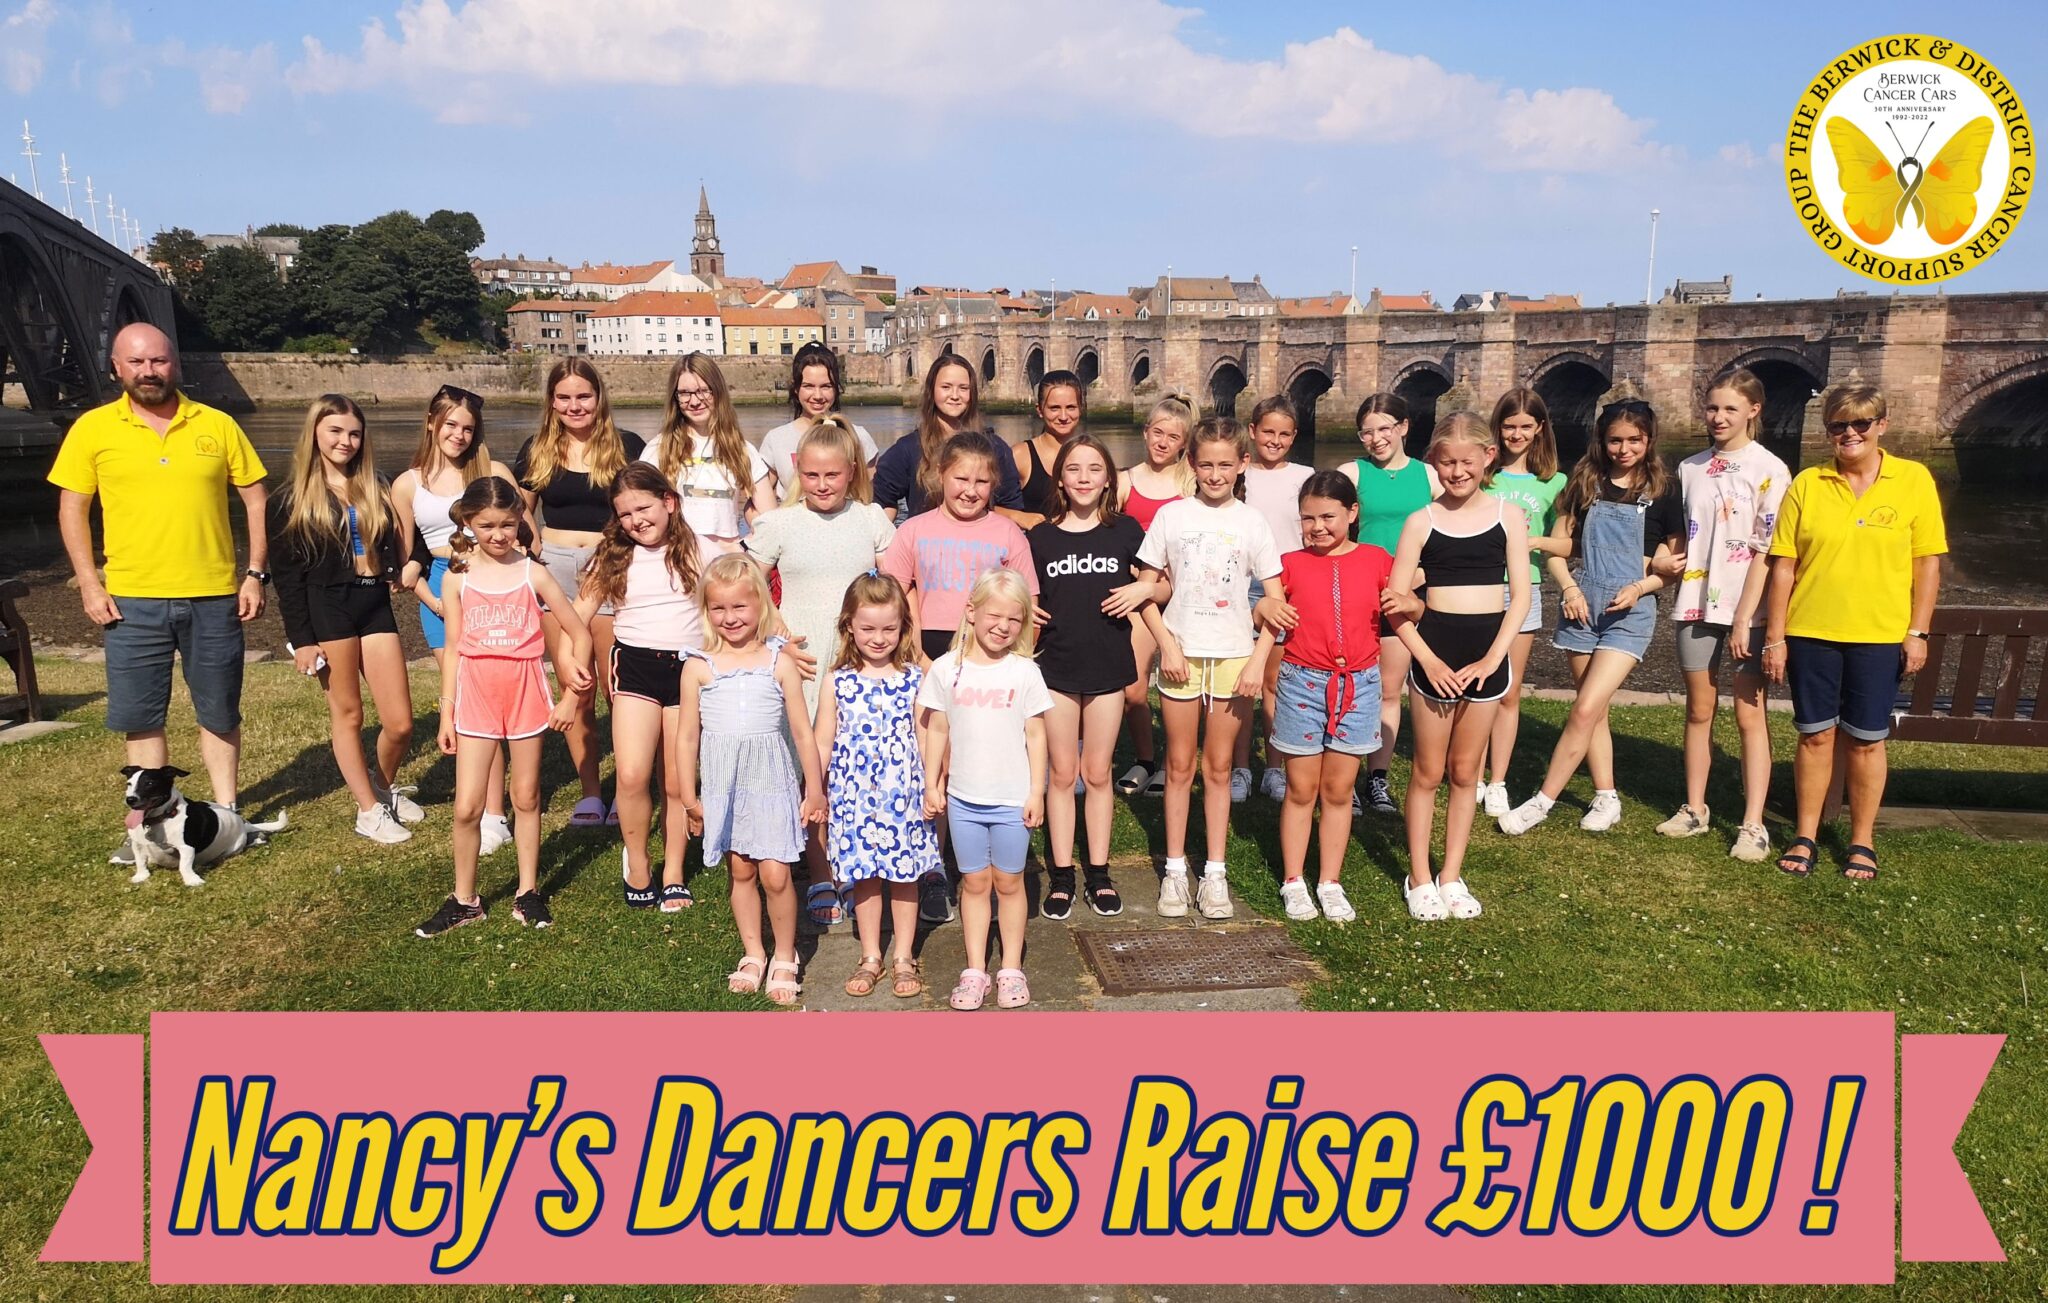 Nancy's Dancers Raise £1000 for Berwick Cancer Cars